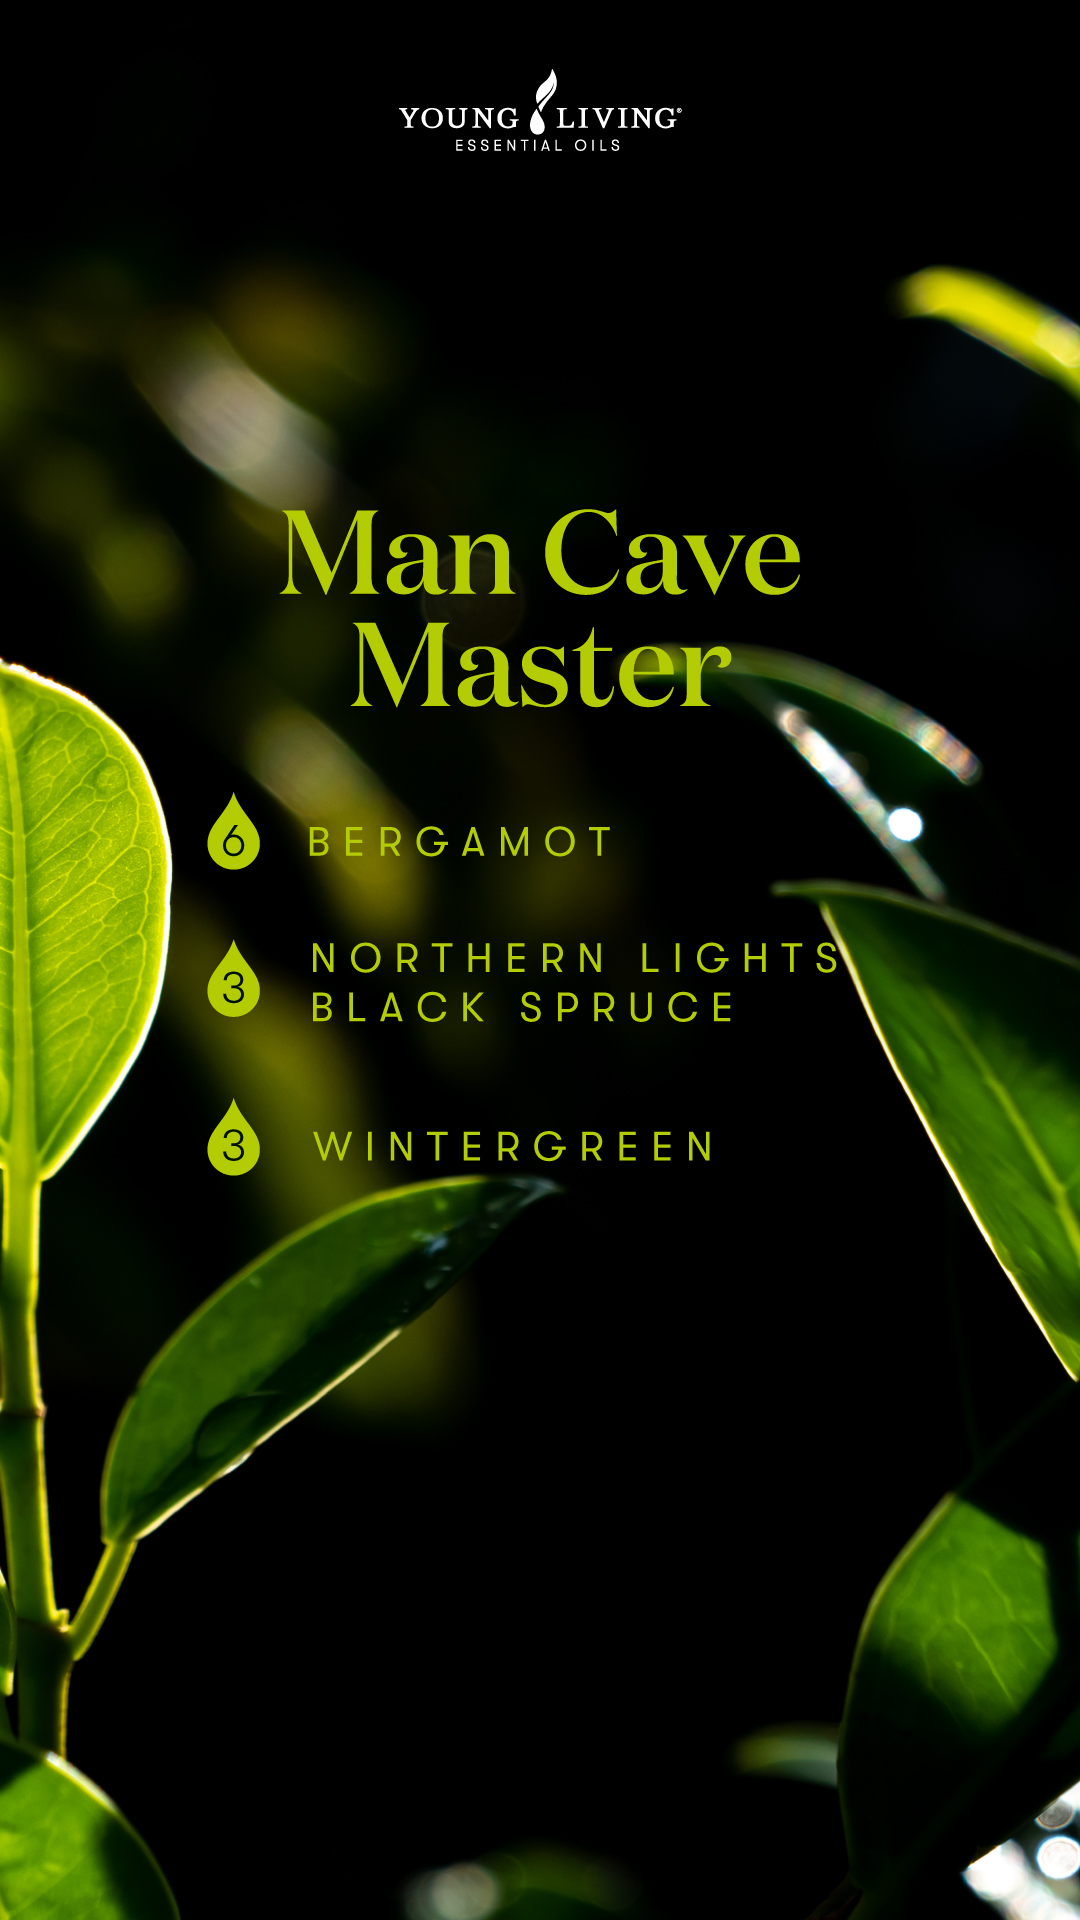 Man Cave Master - •6 drops Bergamot •3 drops Northern Lights Black Spruce •3 drops Wintergreen - Young Living Lavender Life Blog 